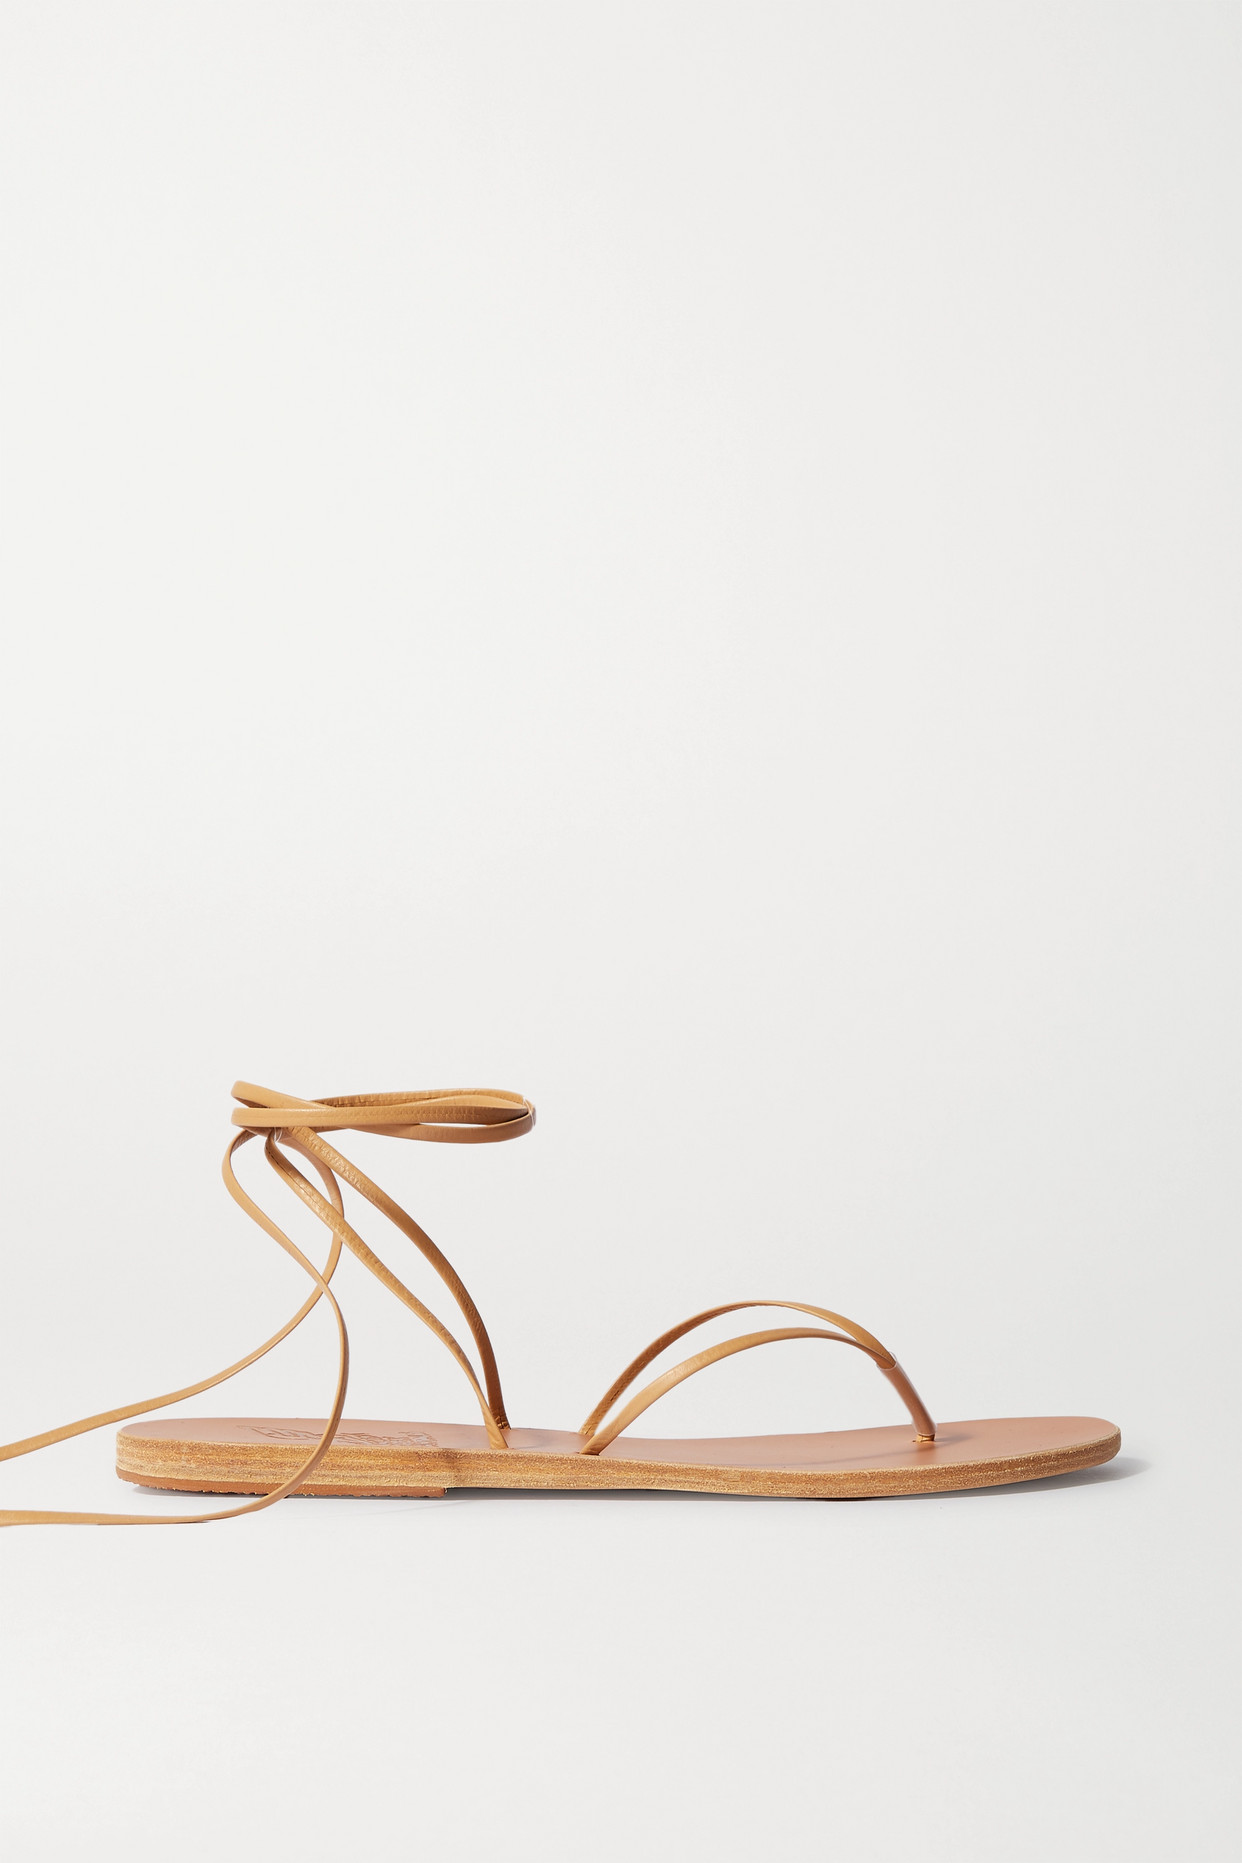 Celia Leather Sandals